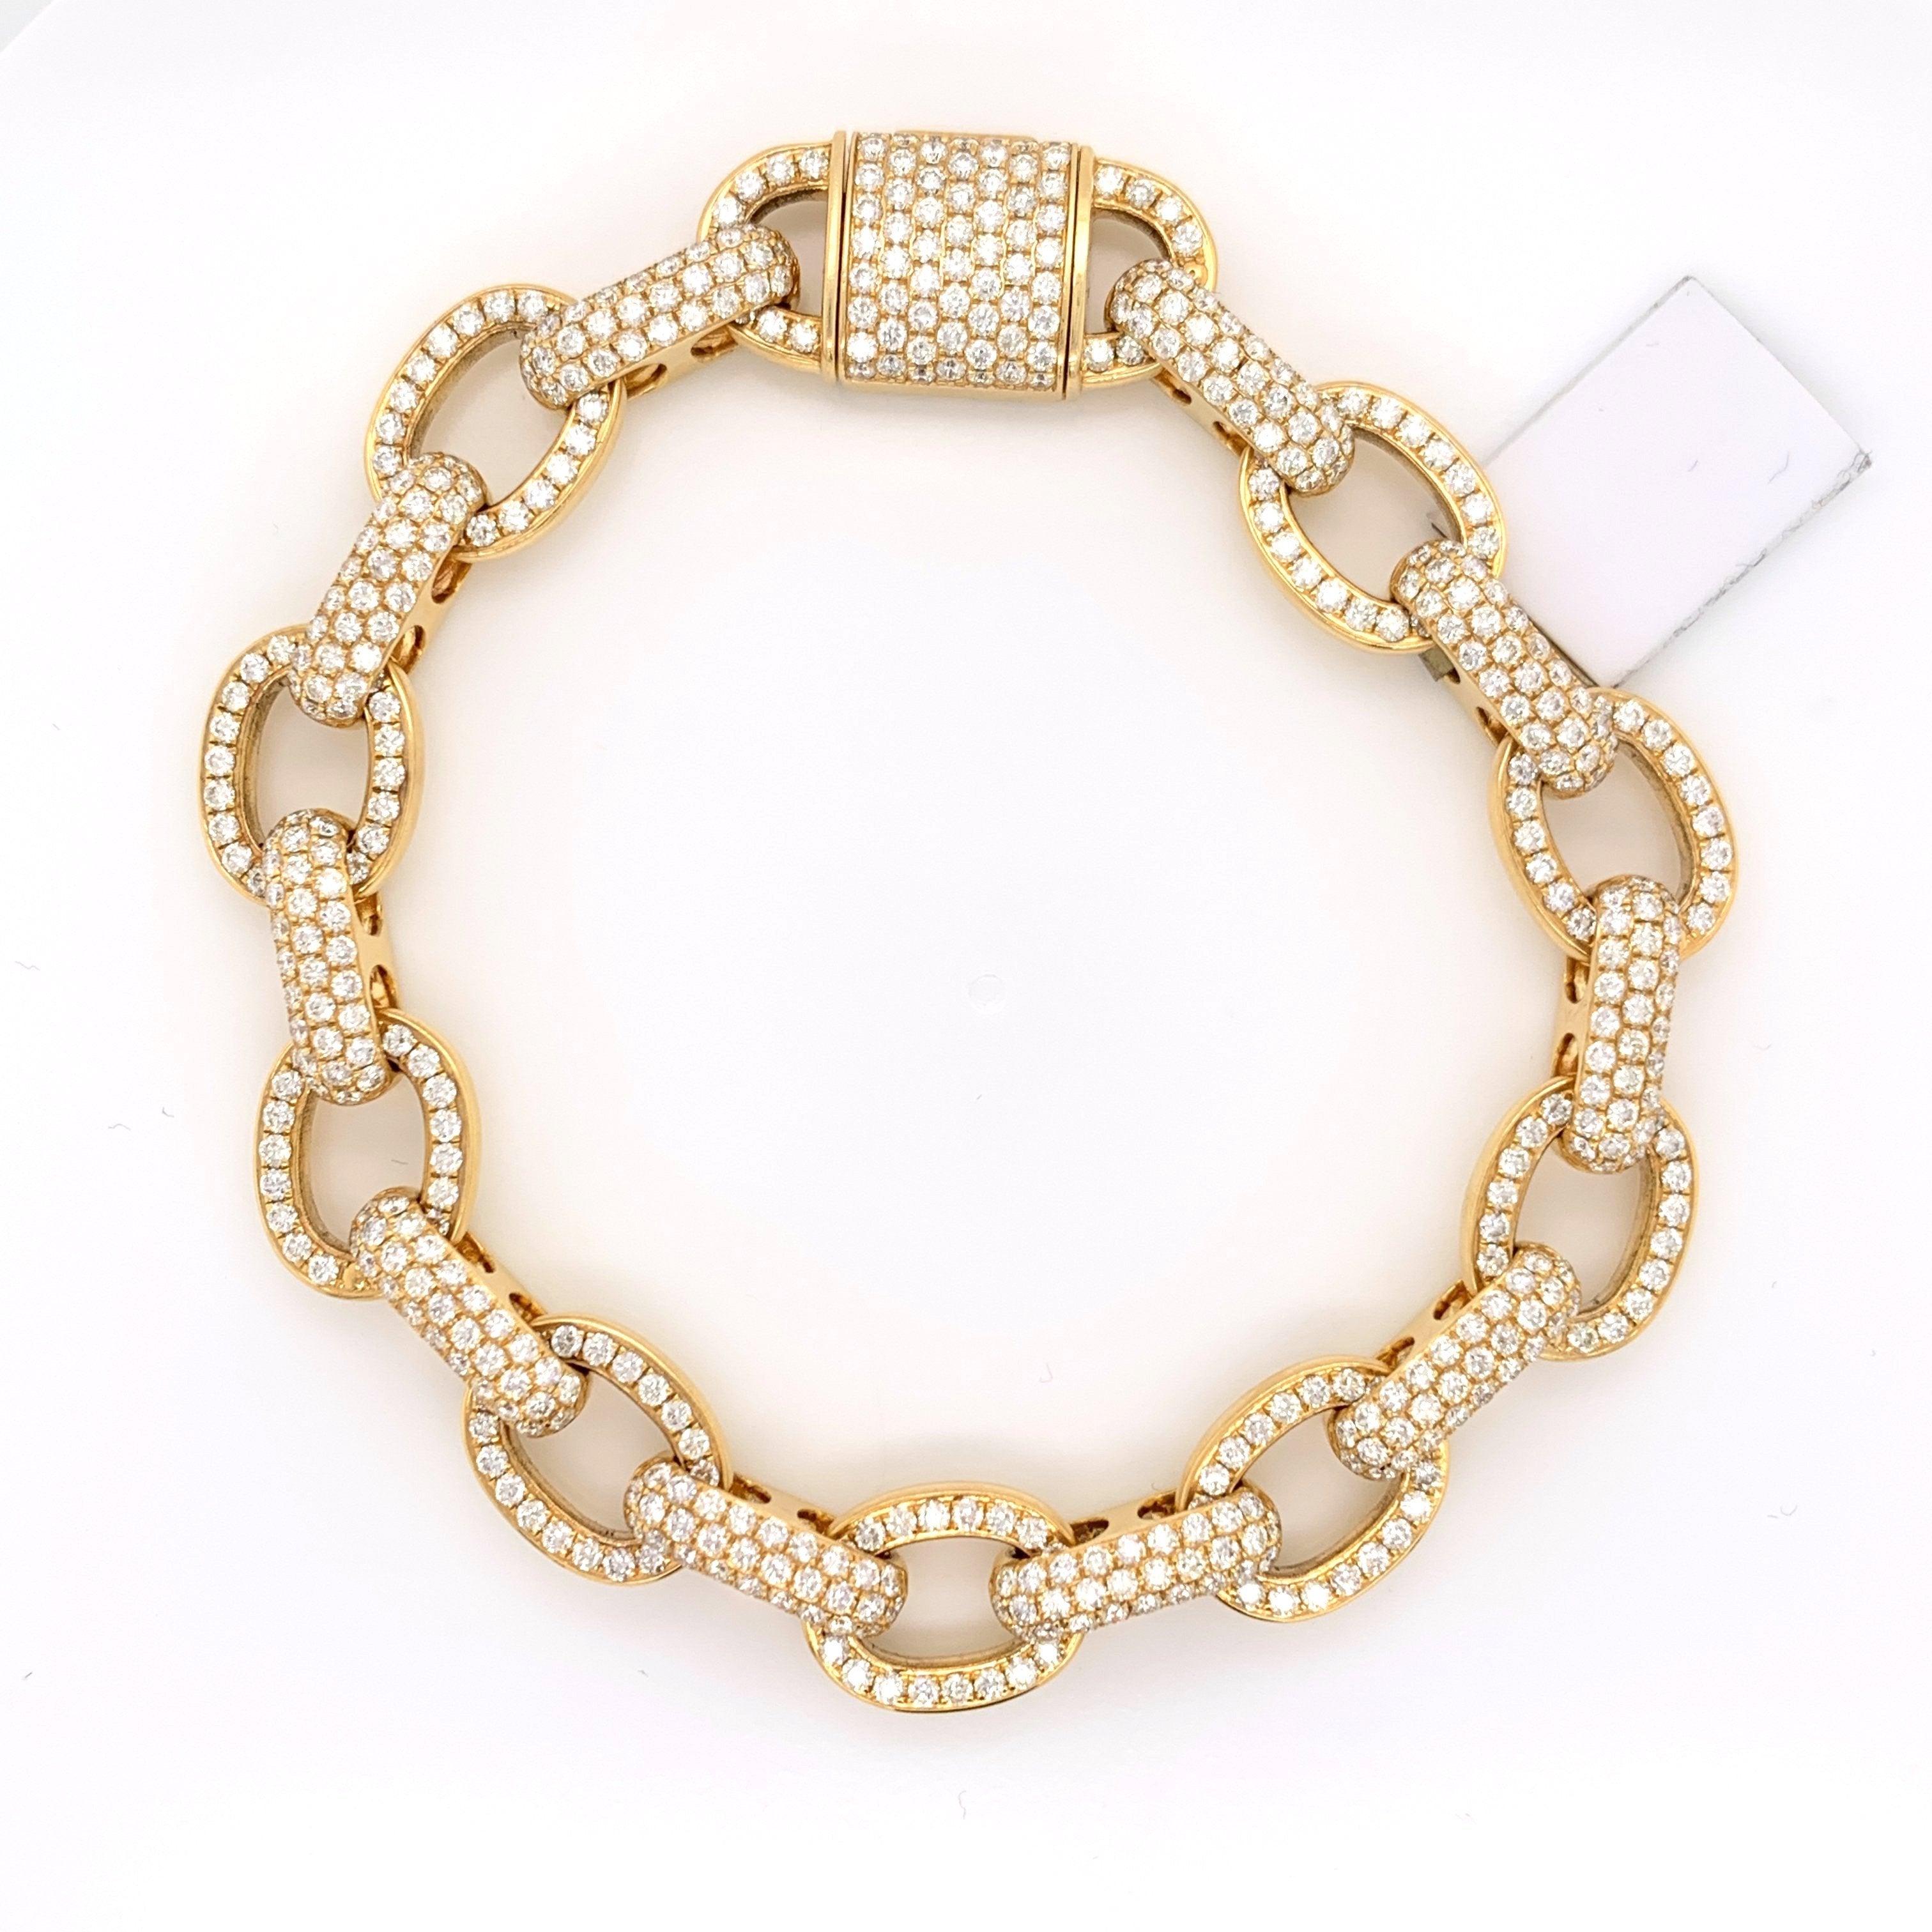 8.50CT Diamond Hermes-Rolo Bracelet in 10K Gold - 12.5mm - White Carat Diamonds 